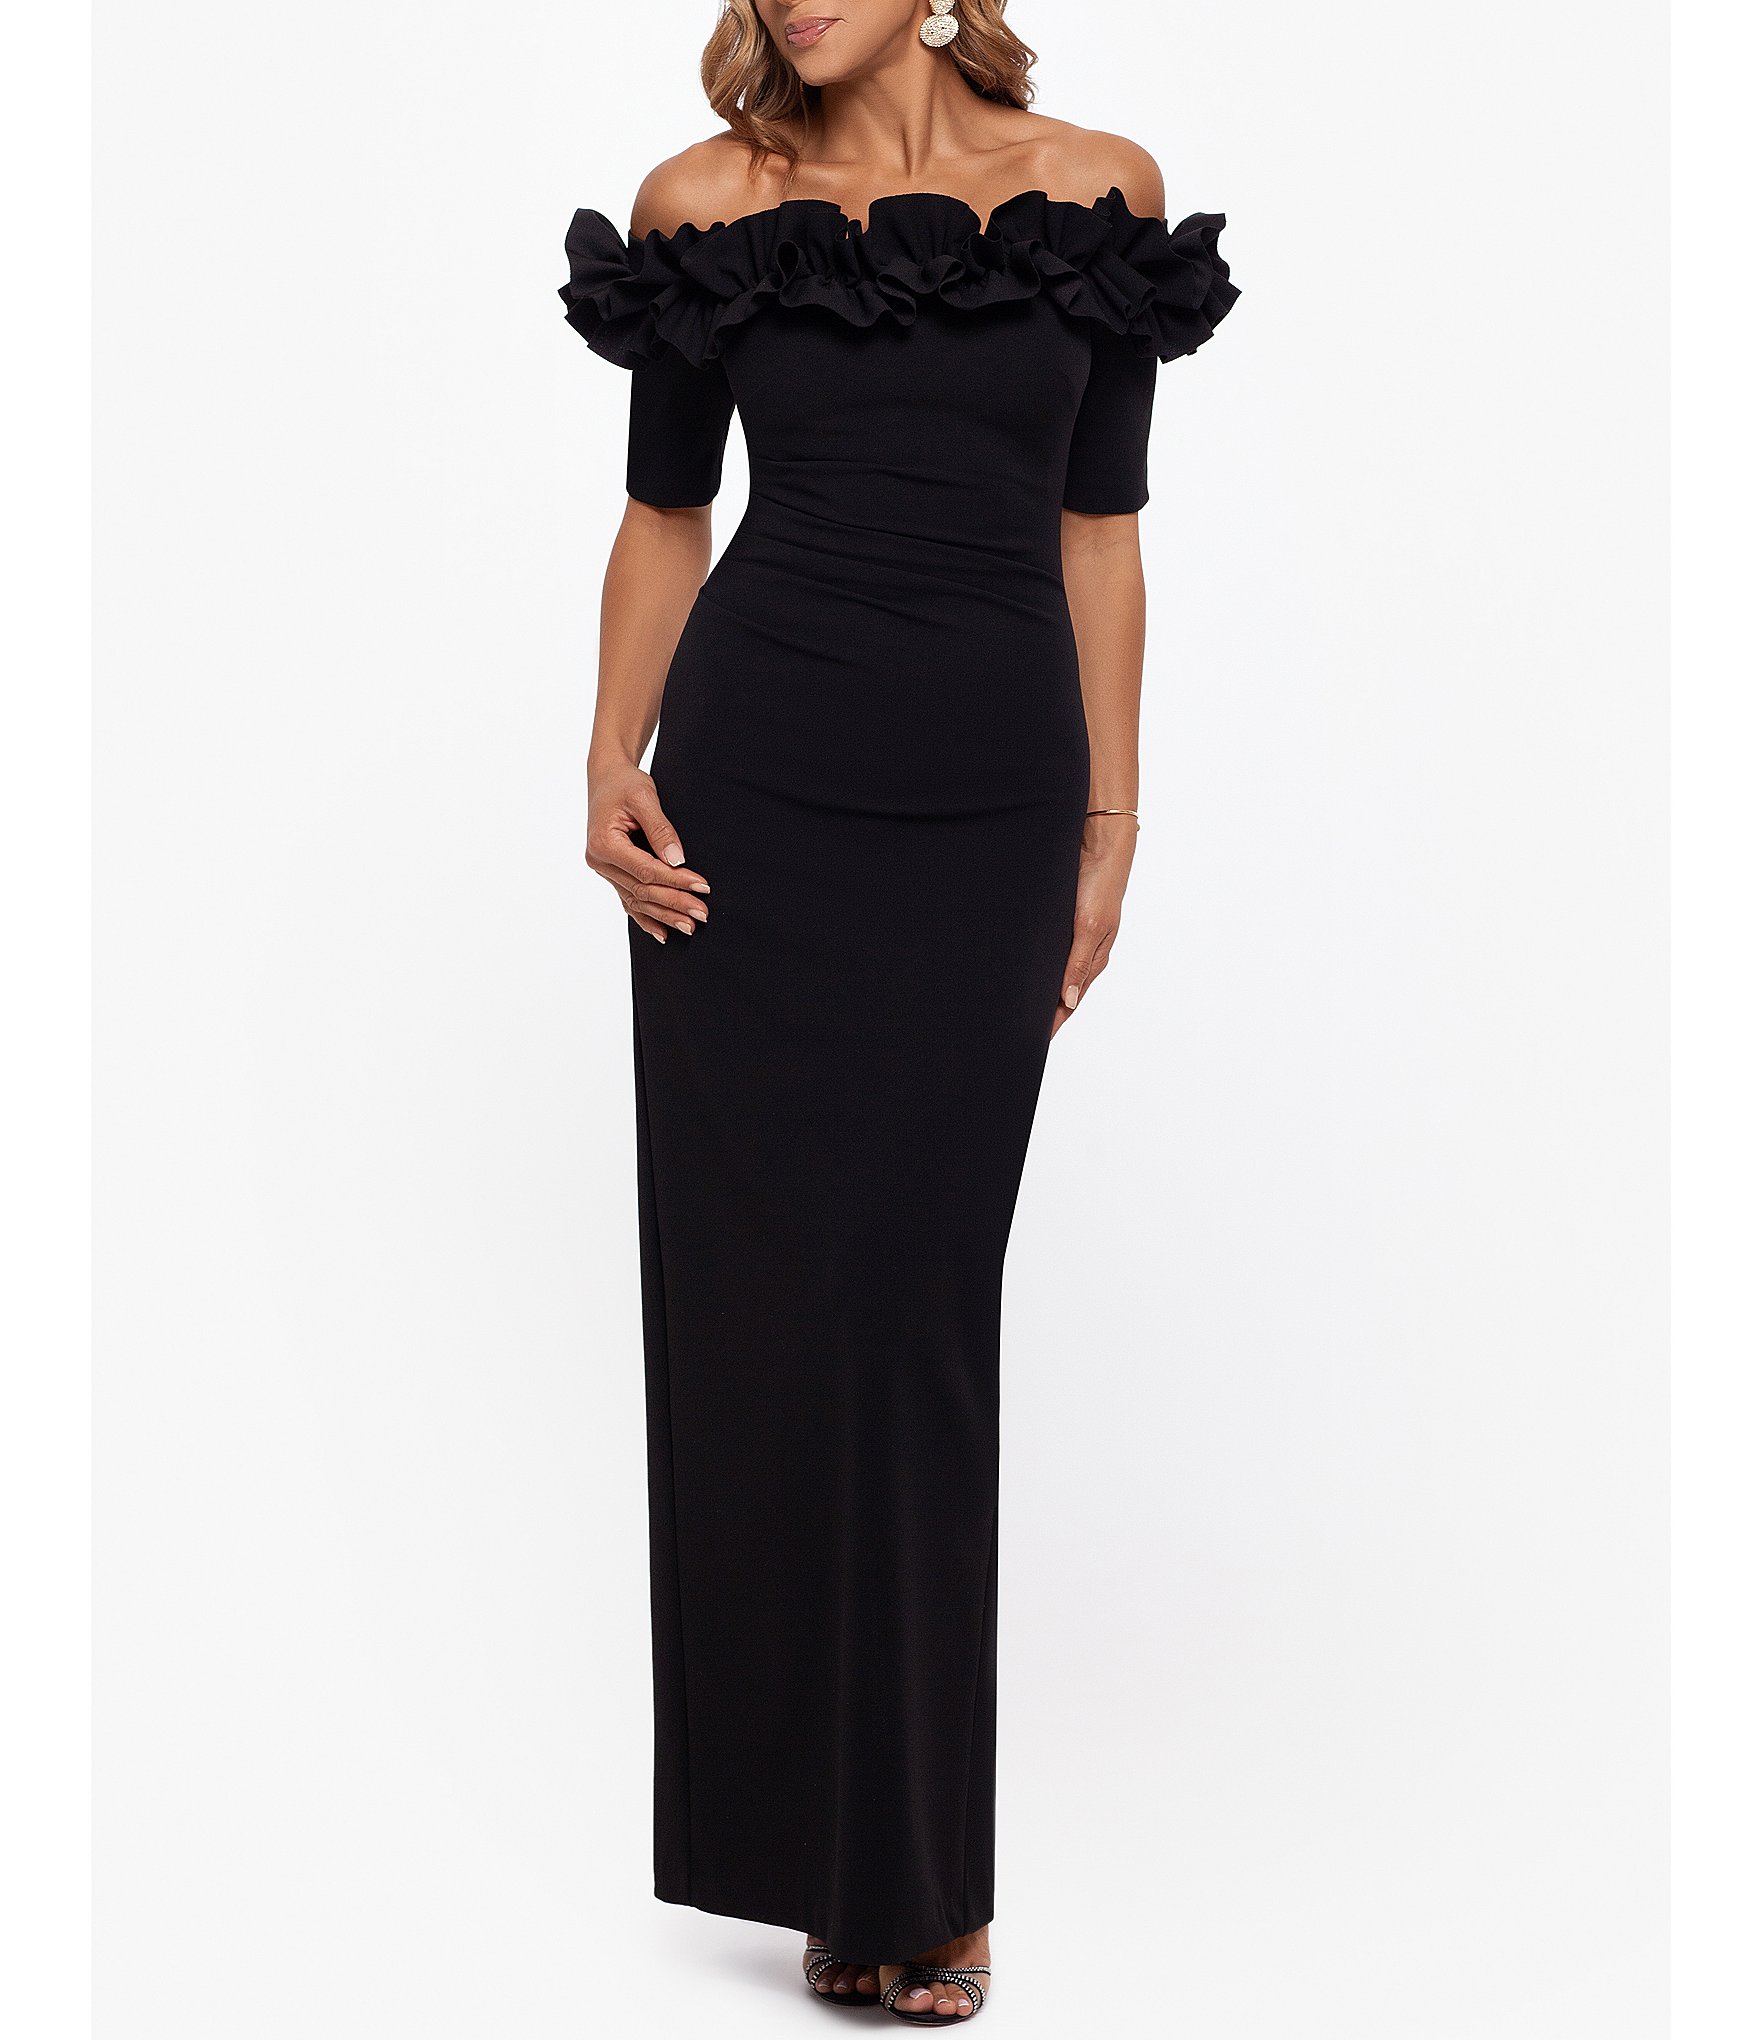 Clearance Cowl Neck Women's Formal Dresses & Evening Gowns | Dillard's